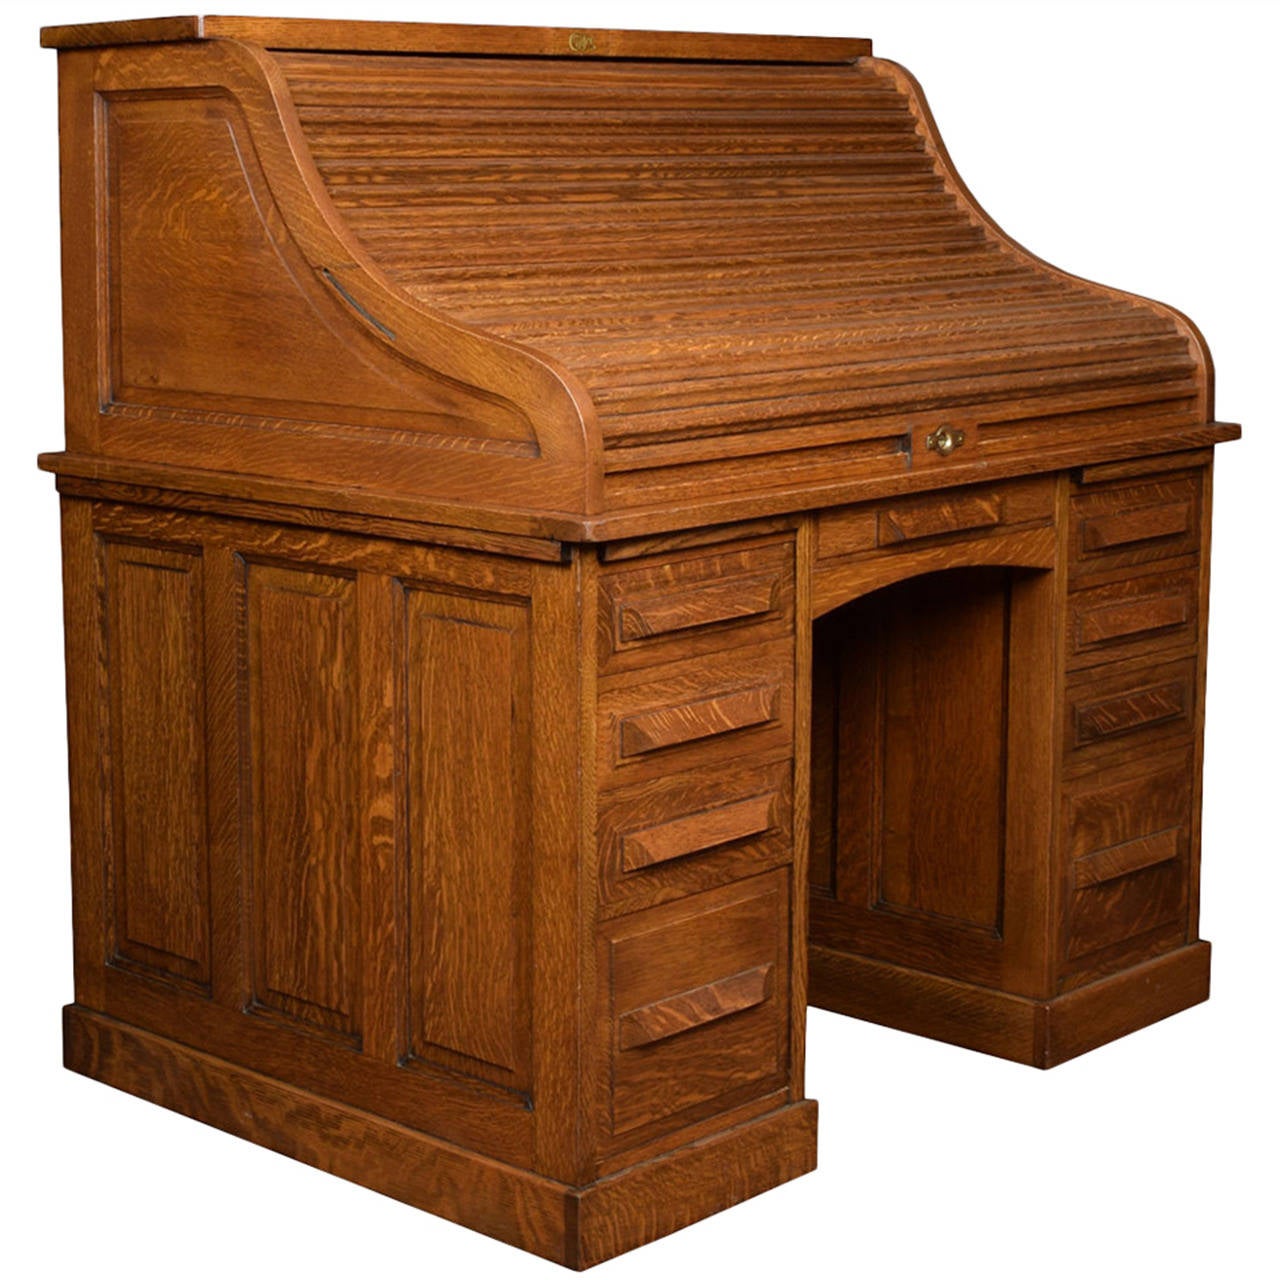 Oak Pedestal Roll Top Desk By Cutler At 1Stdibs | Cutler Roll Top Desk  Models, Cutler Roll Top Desk For Sale, Cutler Roll Top Desk Value